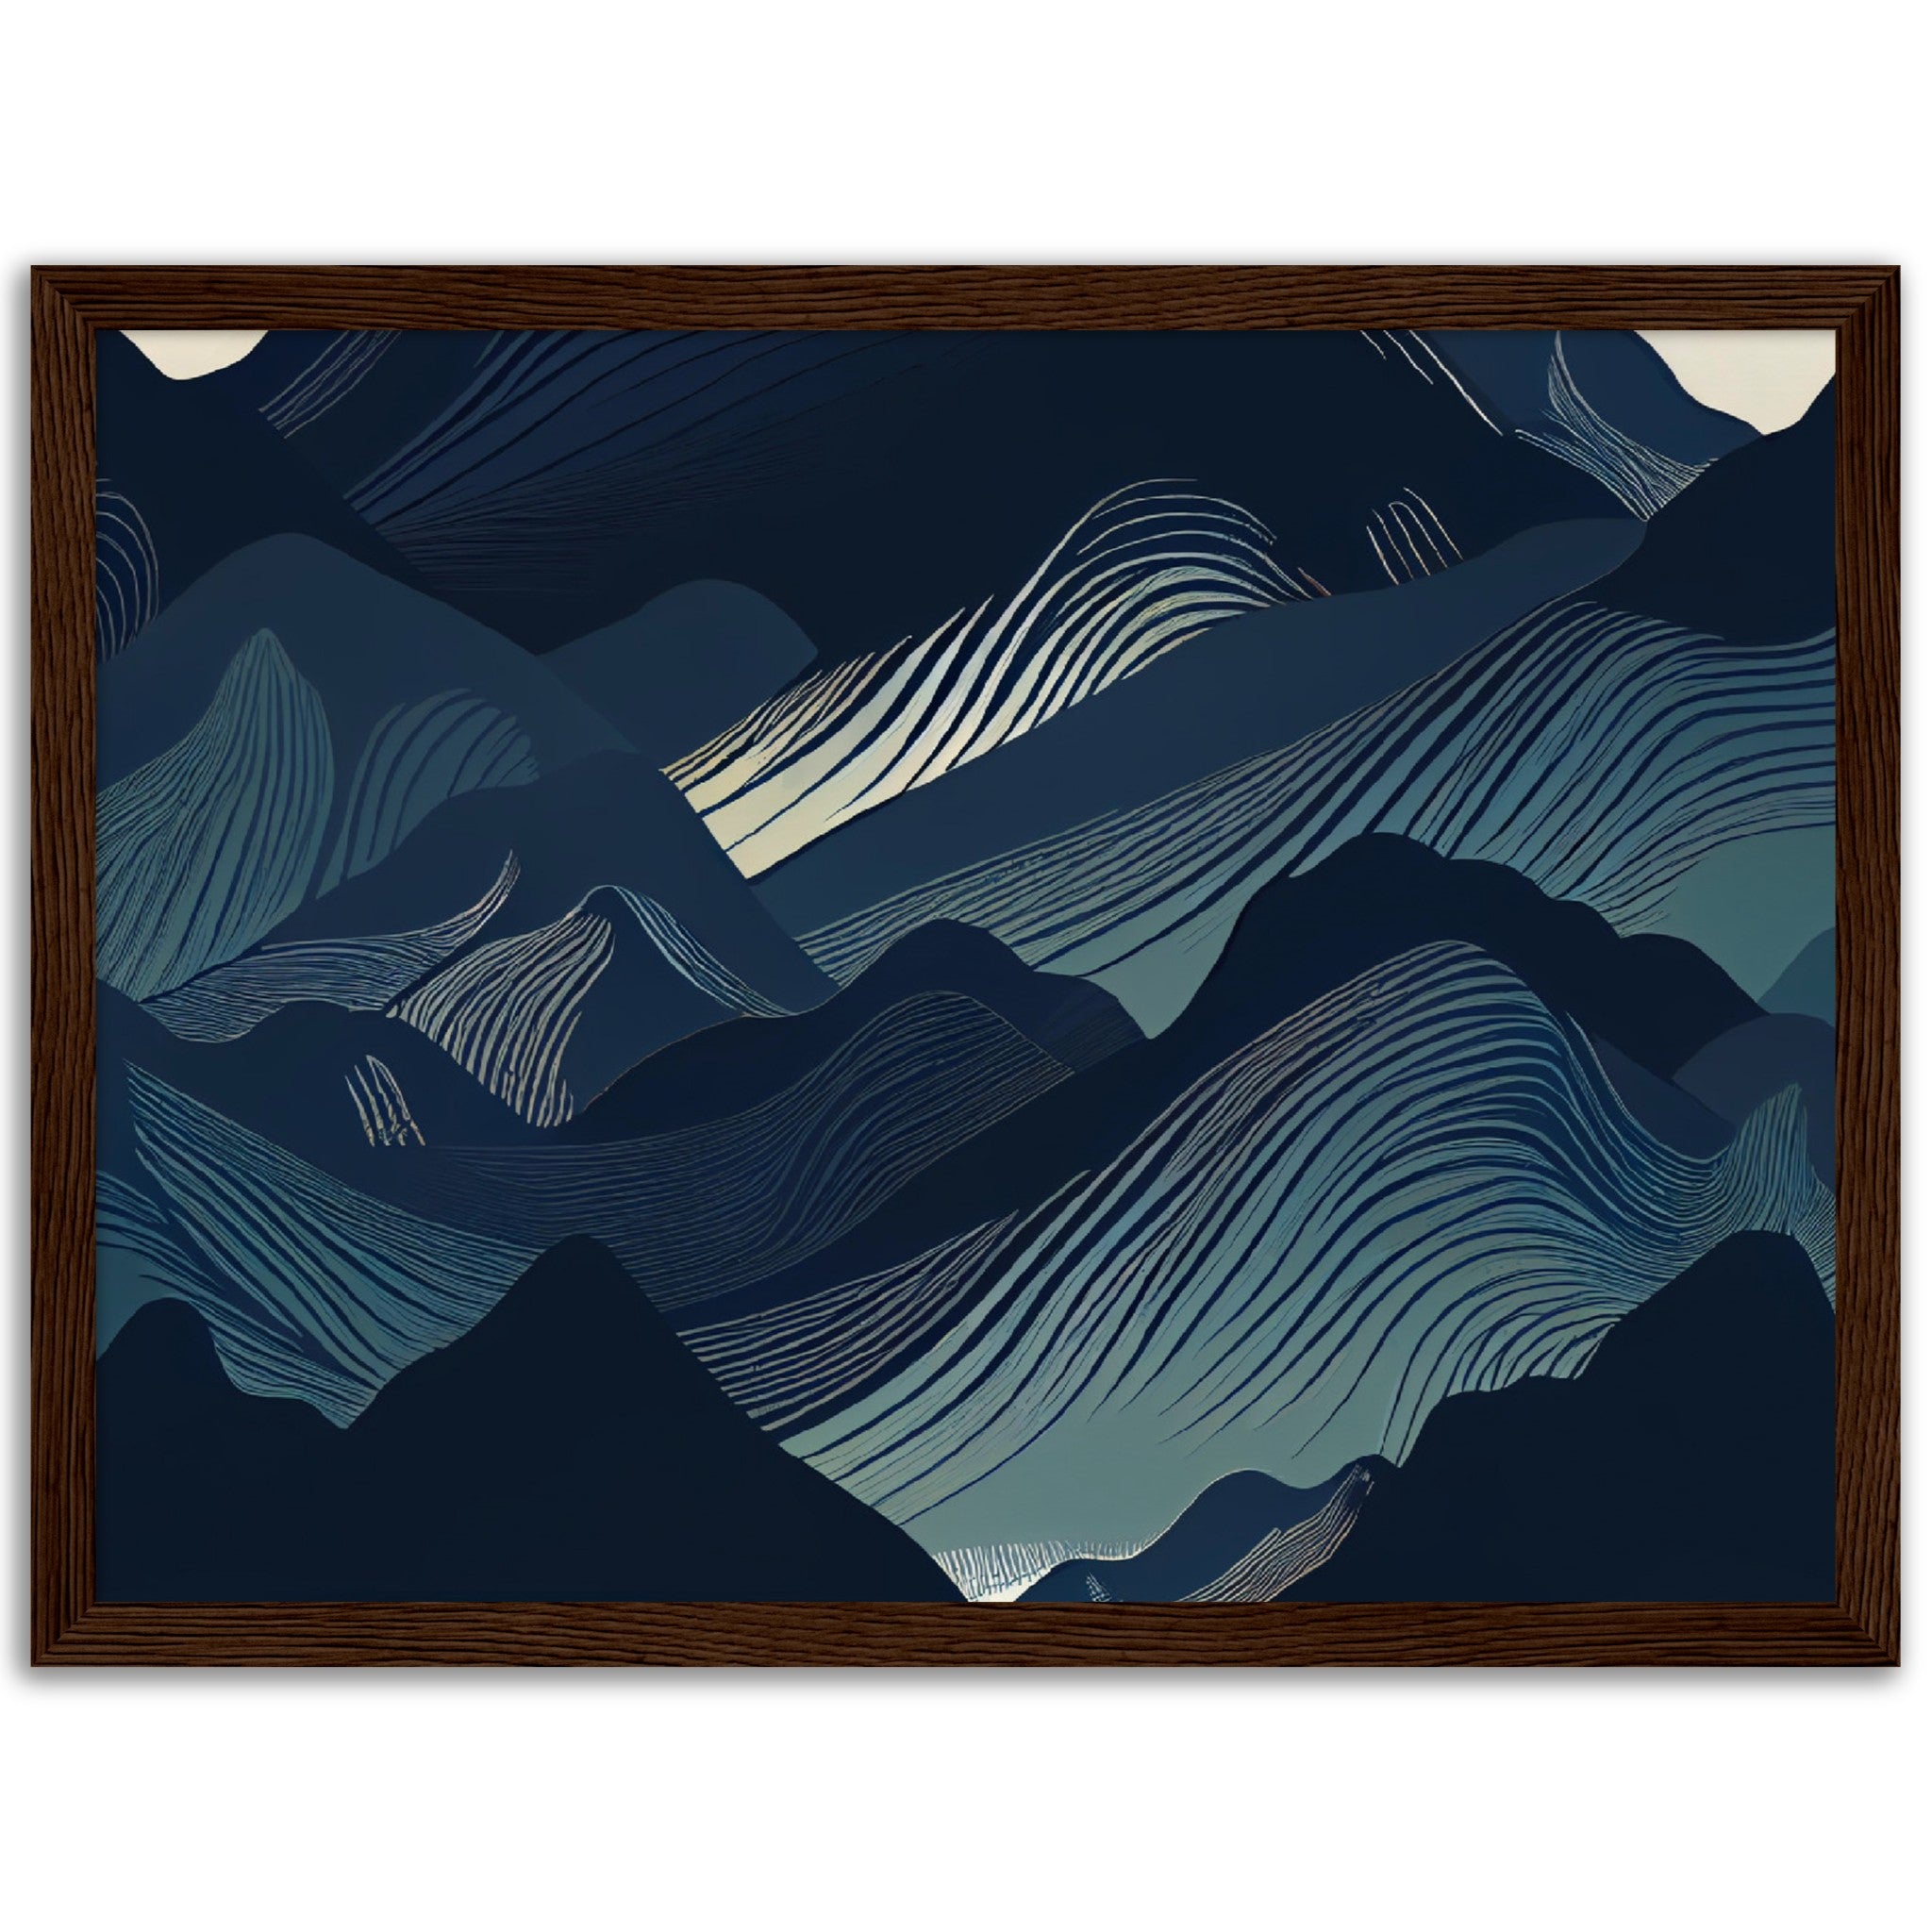 Minimalist Landscape Black Valley - immersiarts